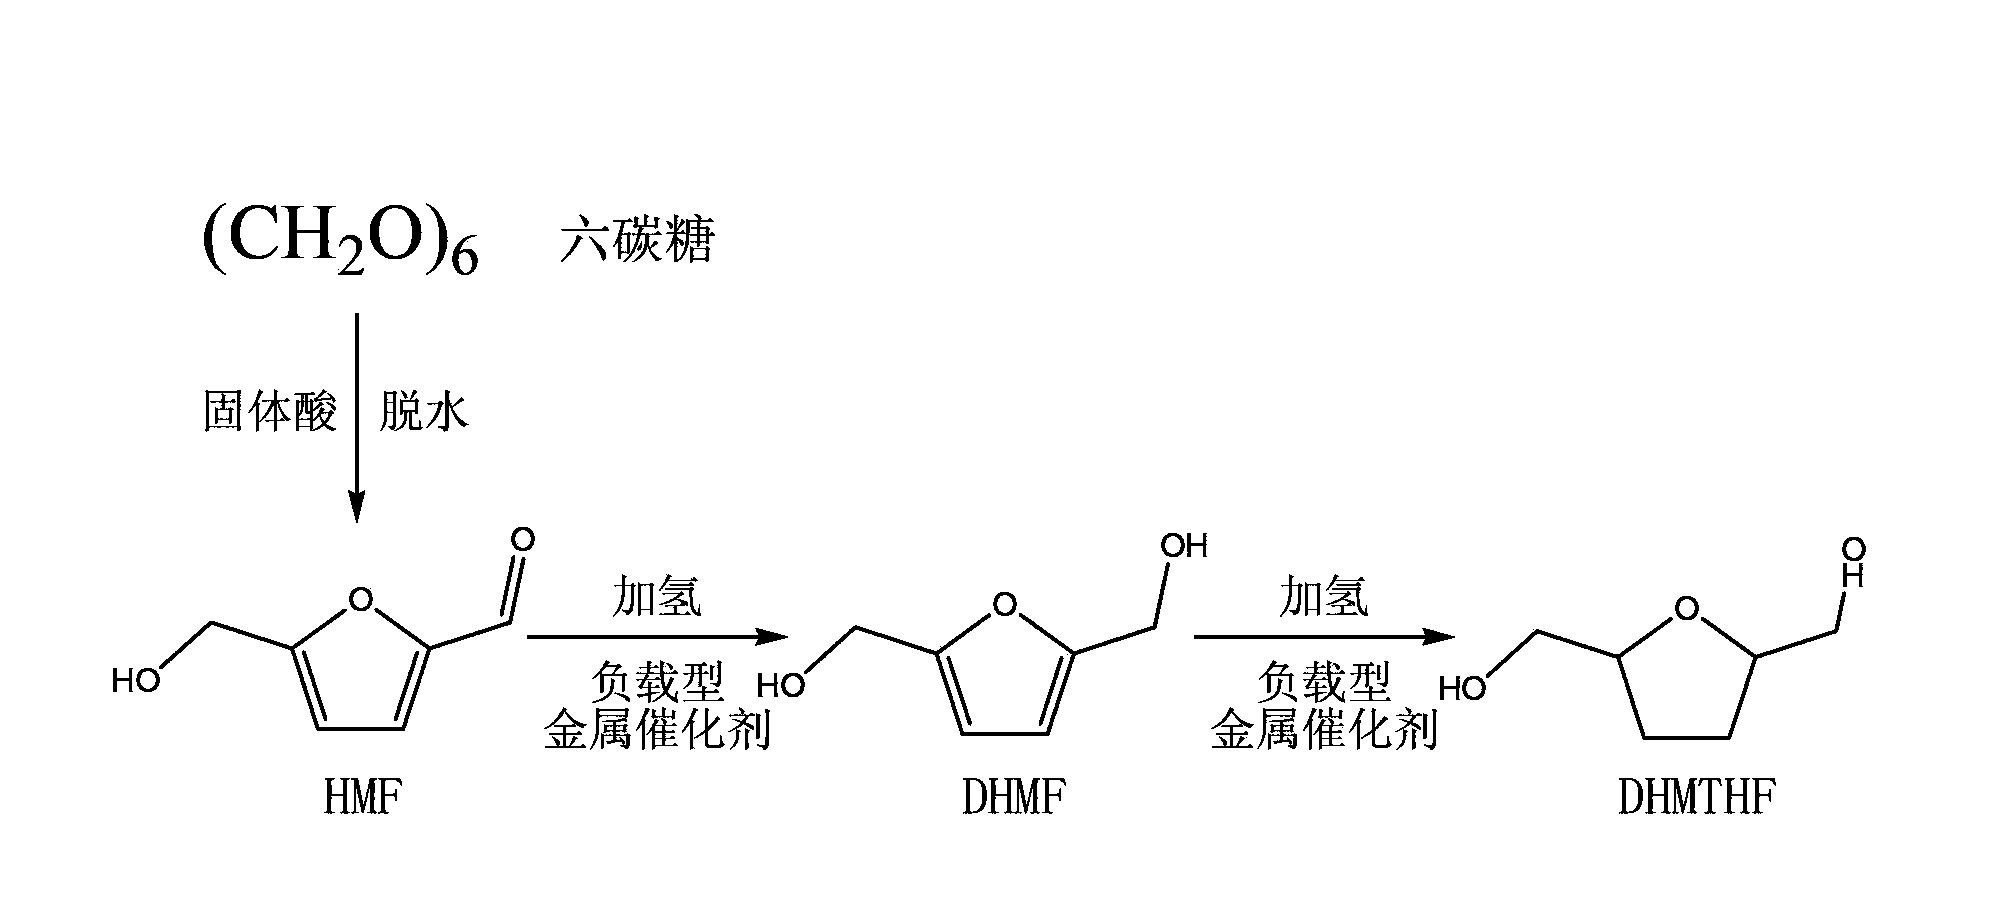 2, 5-dihydroxy methyl furan or 2, 5-dihydroxy methyl tetrahydrofuran synthesis method